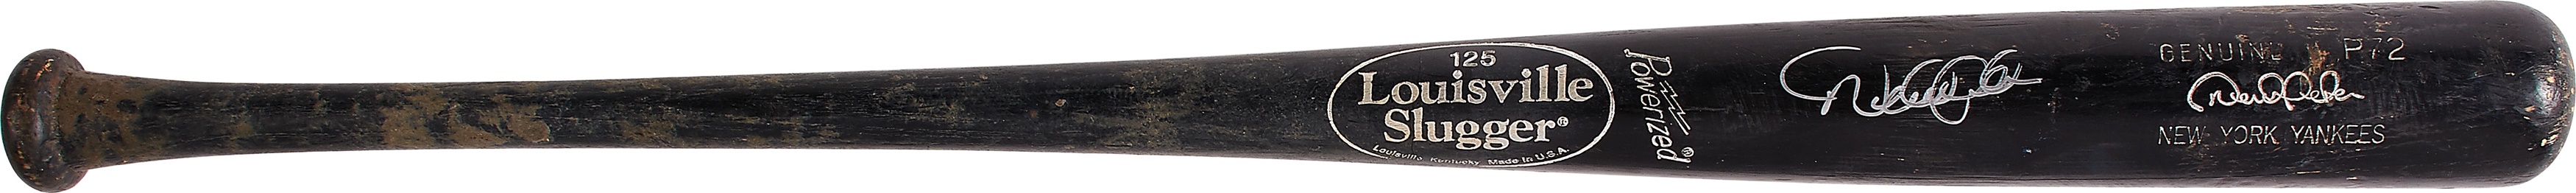 - 2014 Derek Jeter Game Used Bat From His Toronto Farwell